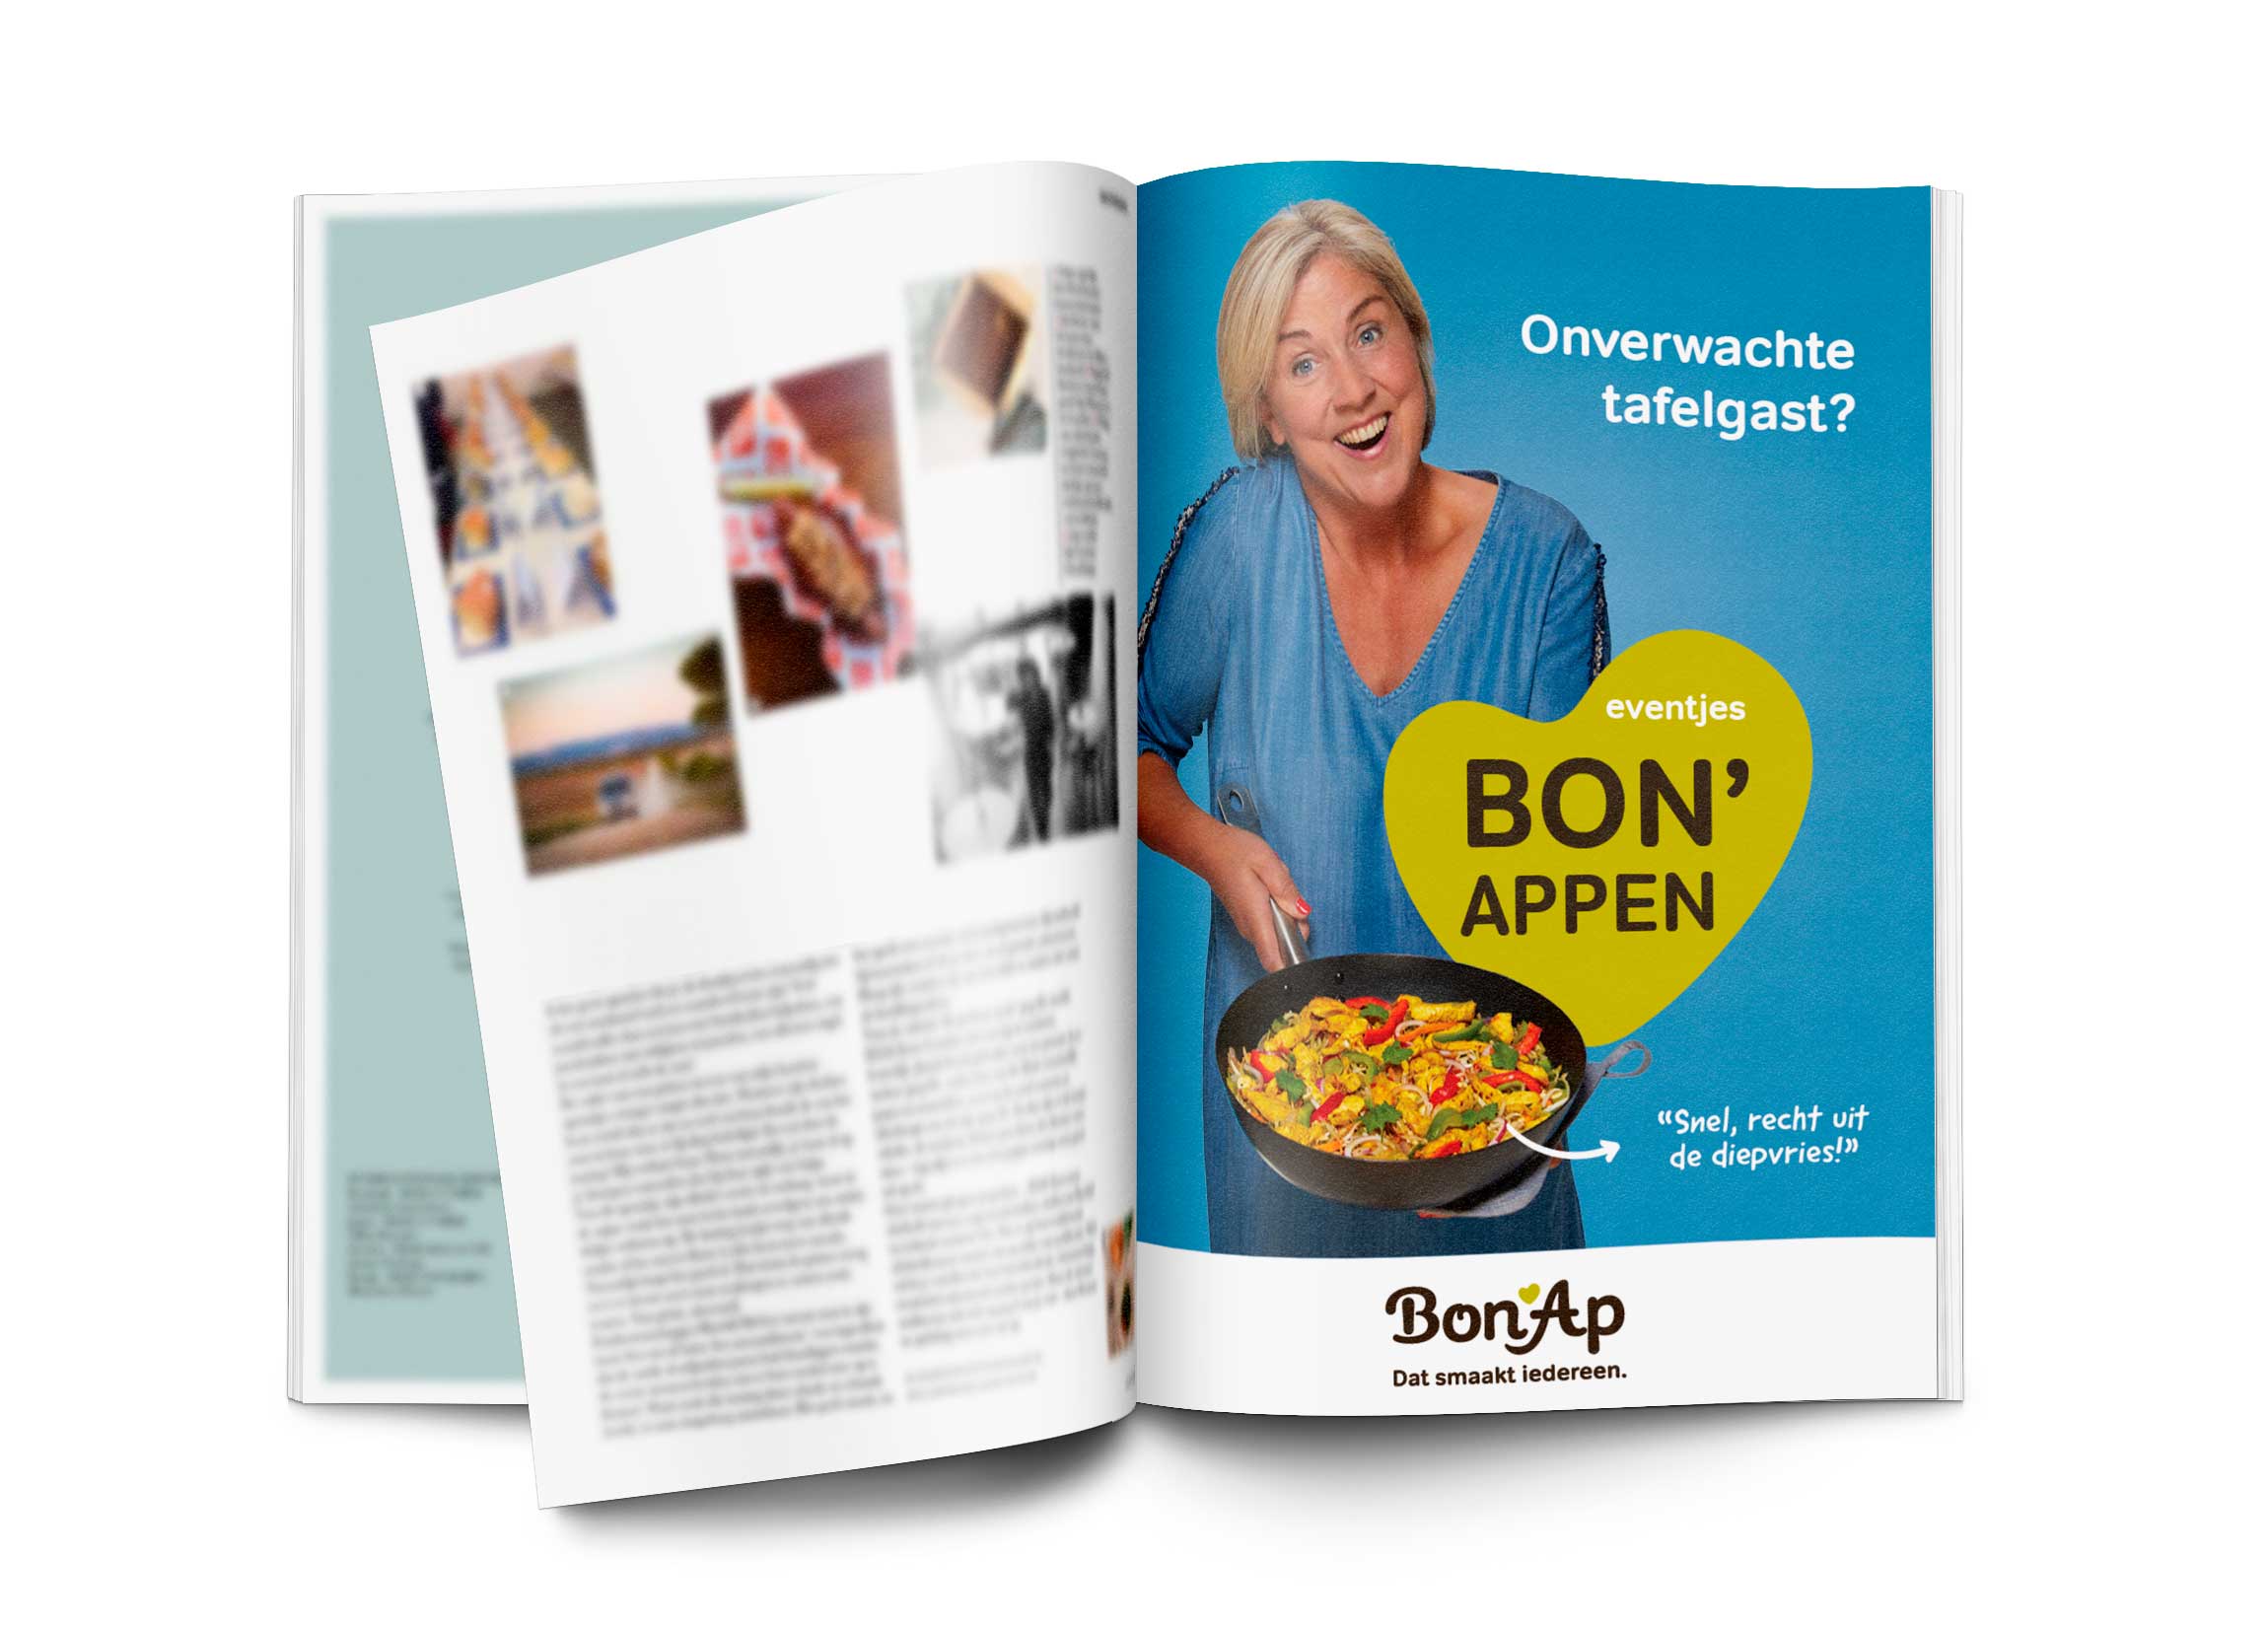 BonAp-advertenties-MockUp2